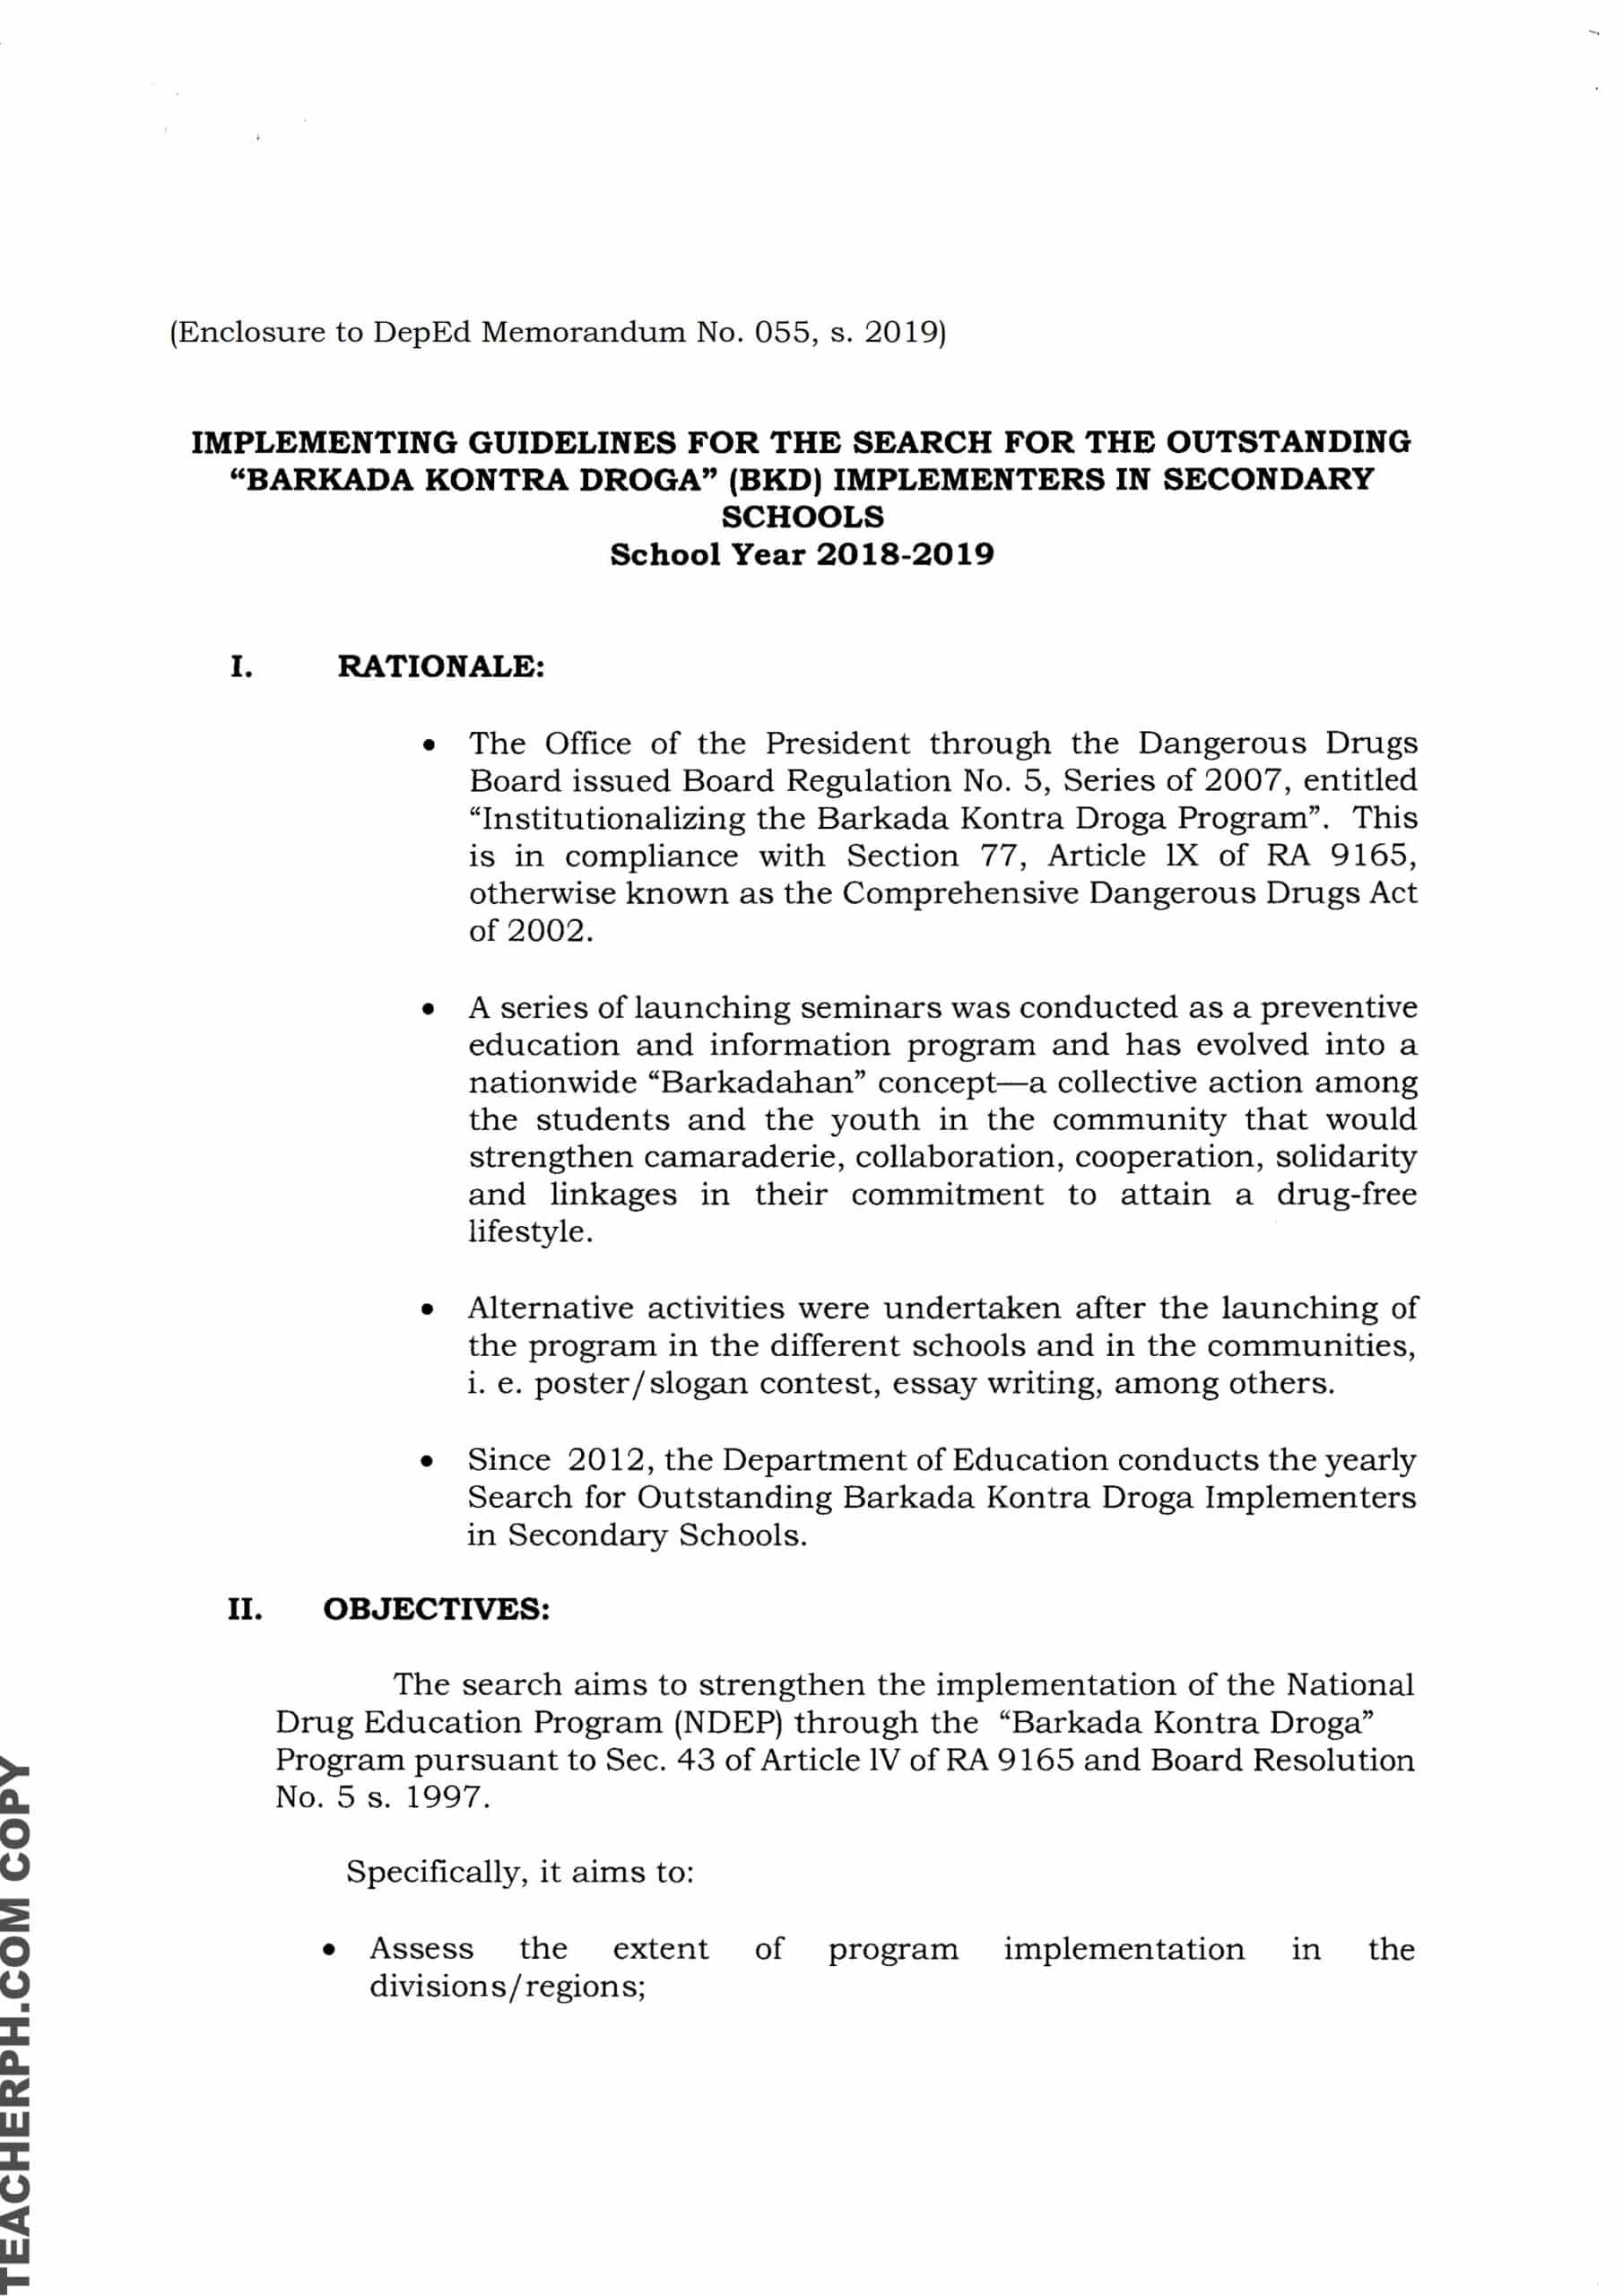 thesis statement of barkada kontra droga